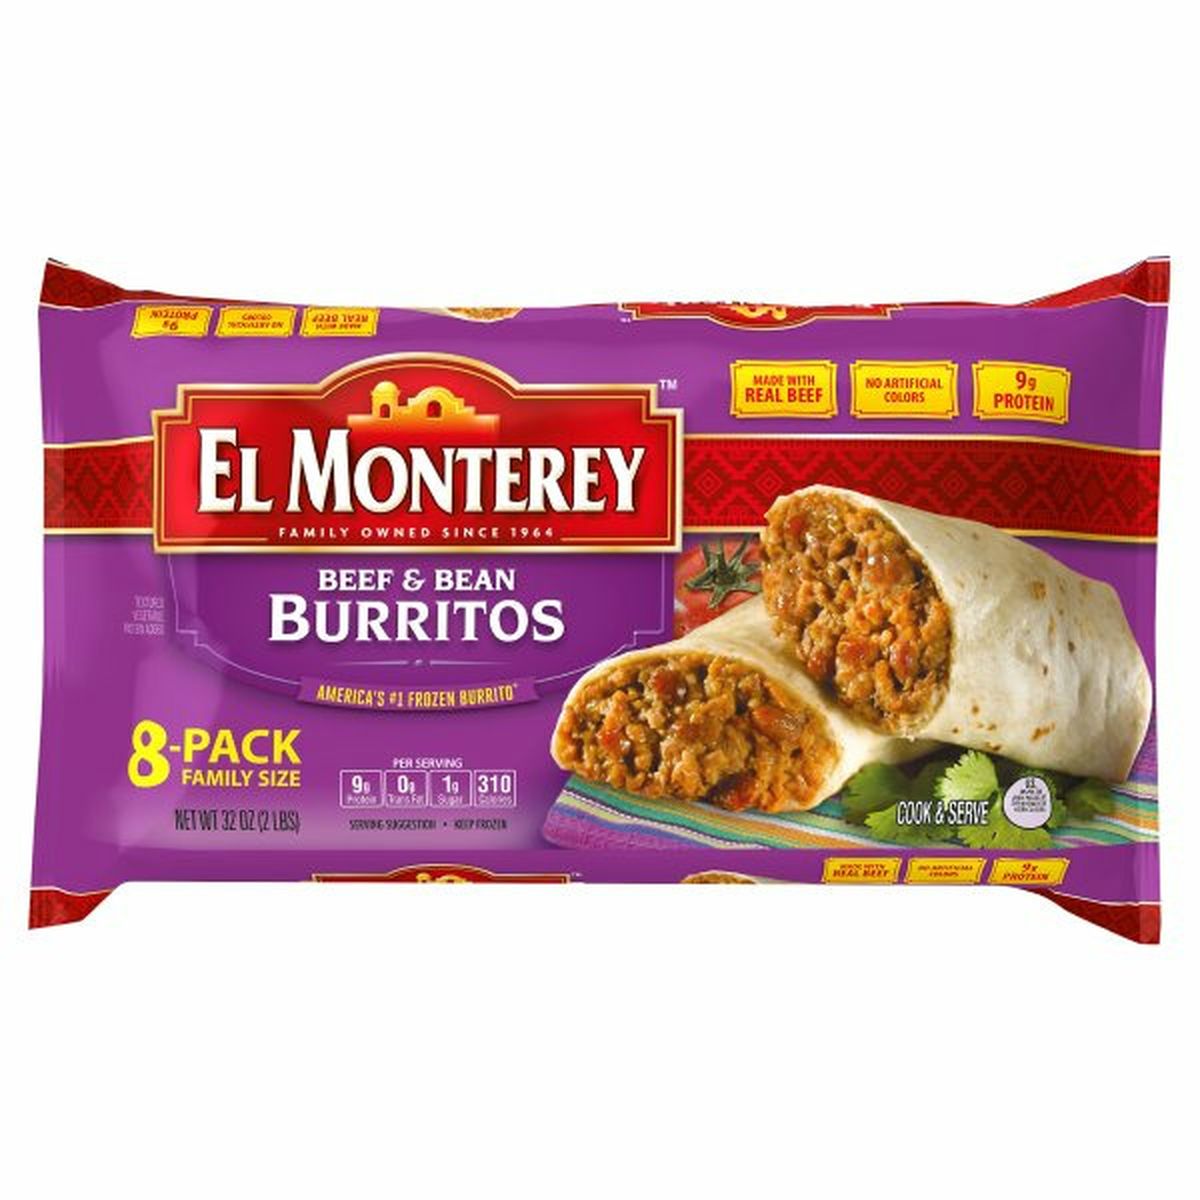 Calories in El Monterey Burritos, Beef & Bean, Family Size, 8-Pack